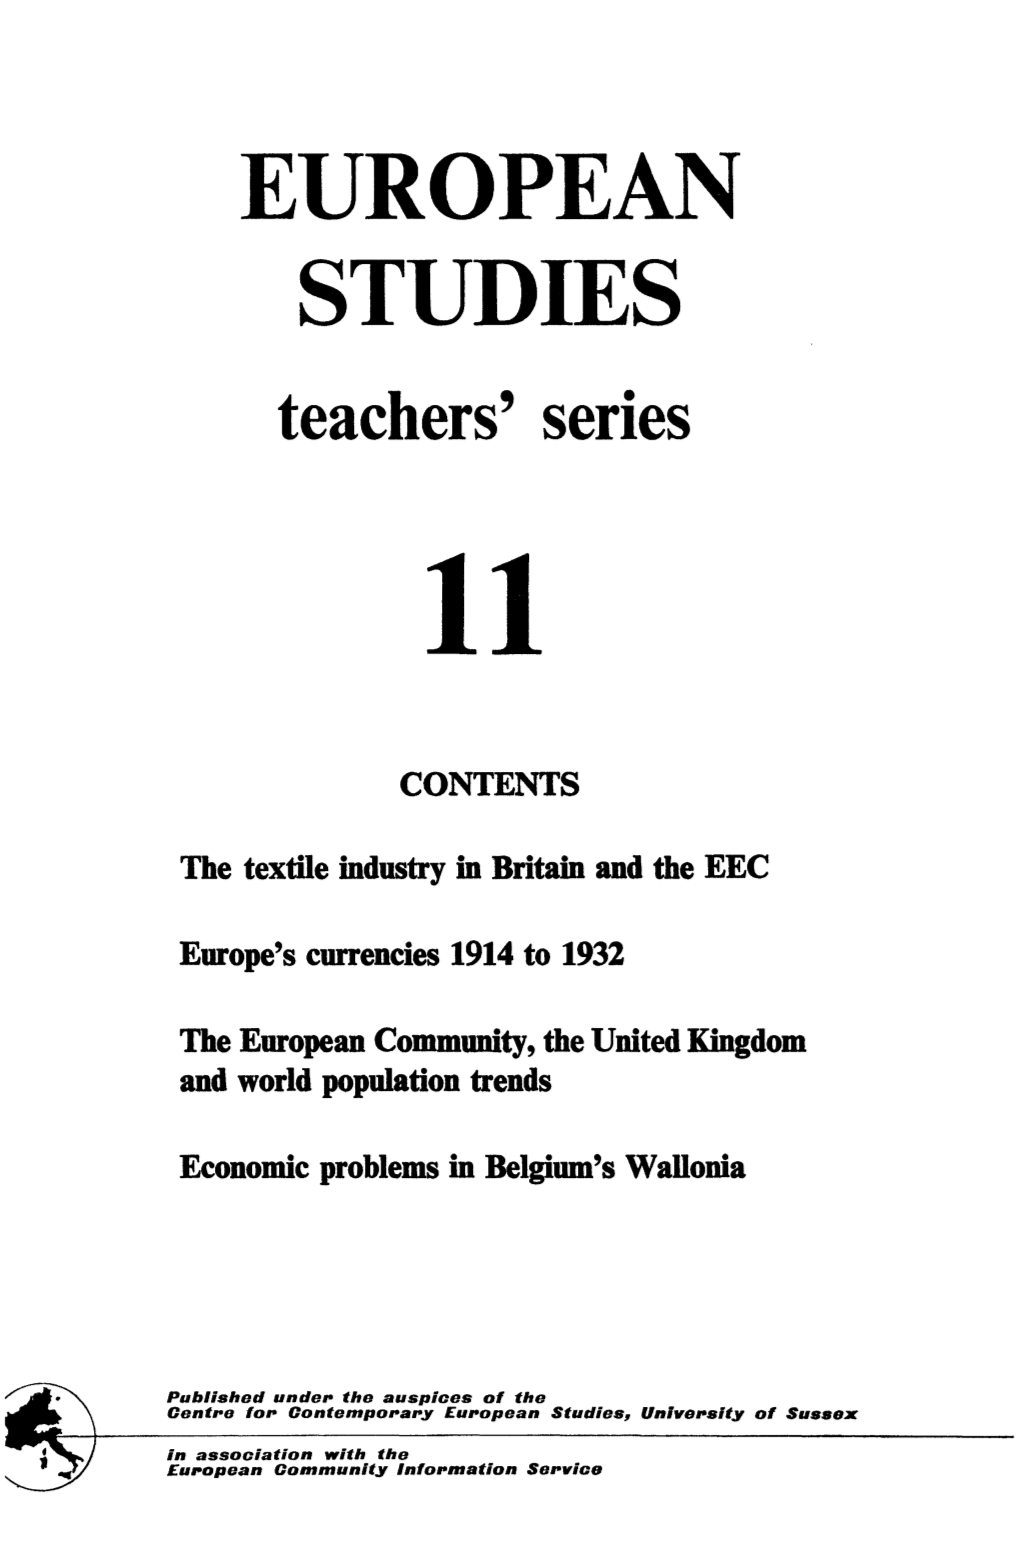 EUROPEAN STUDIES Teachers' Series 11